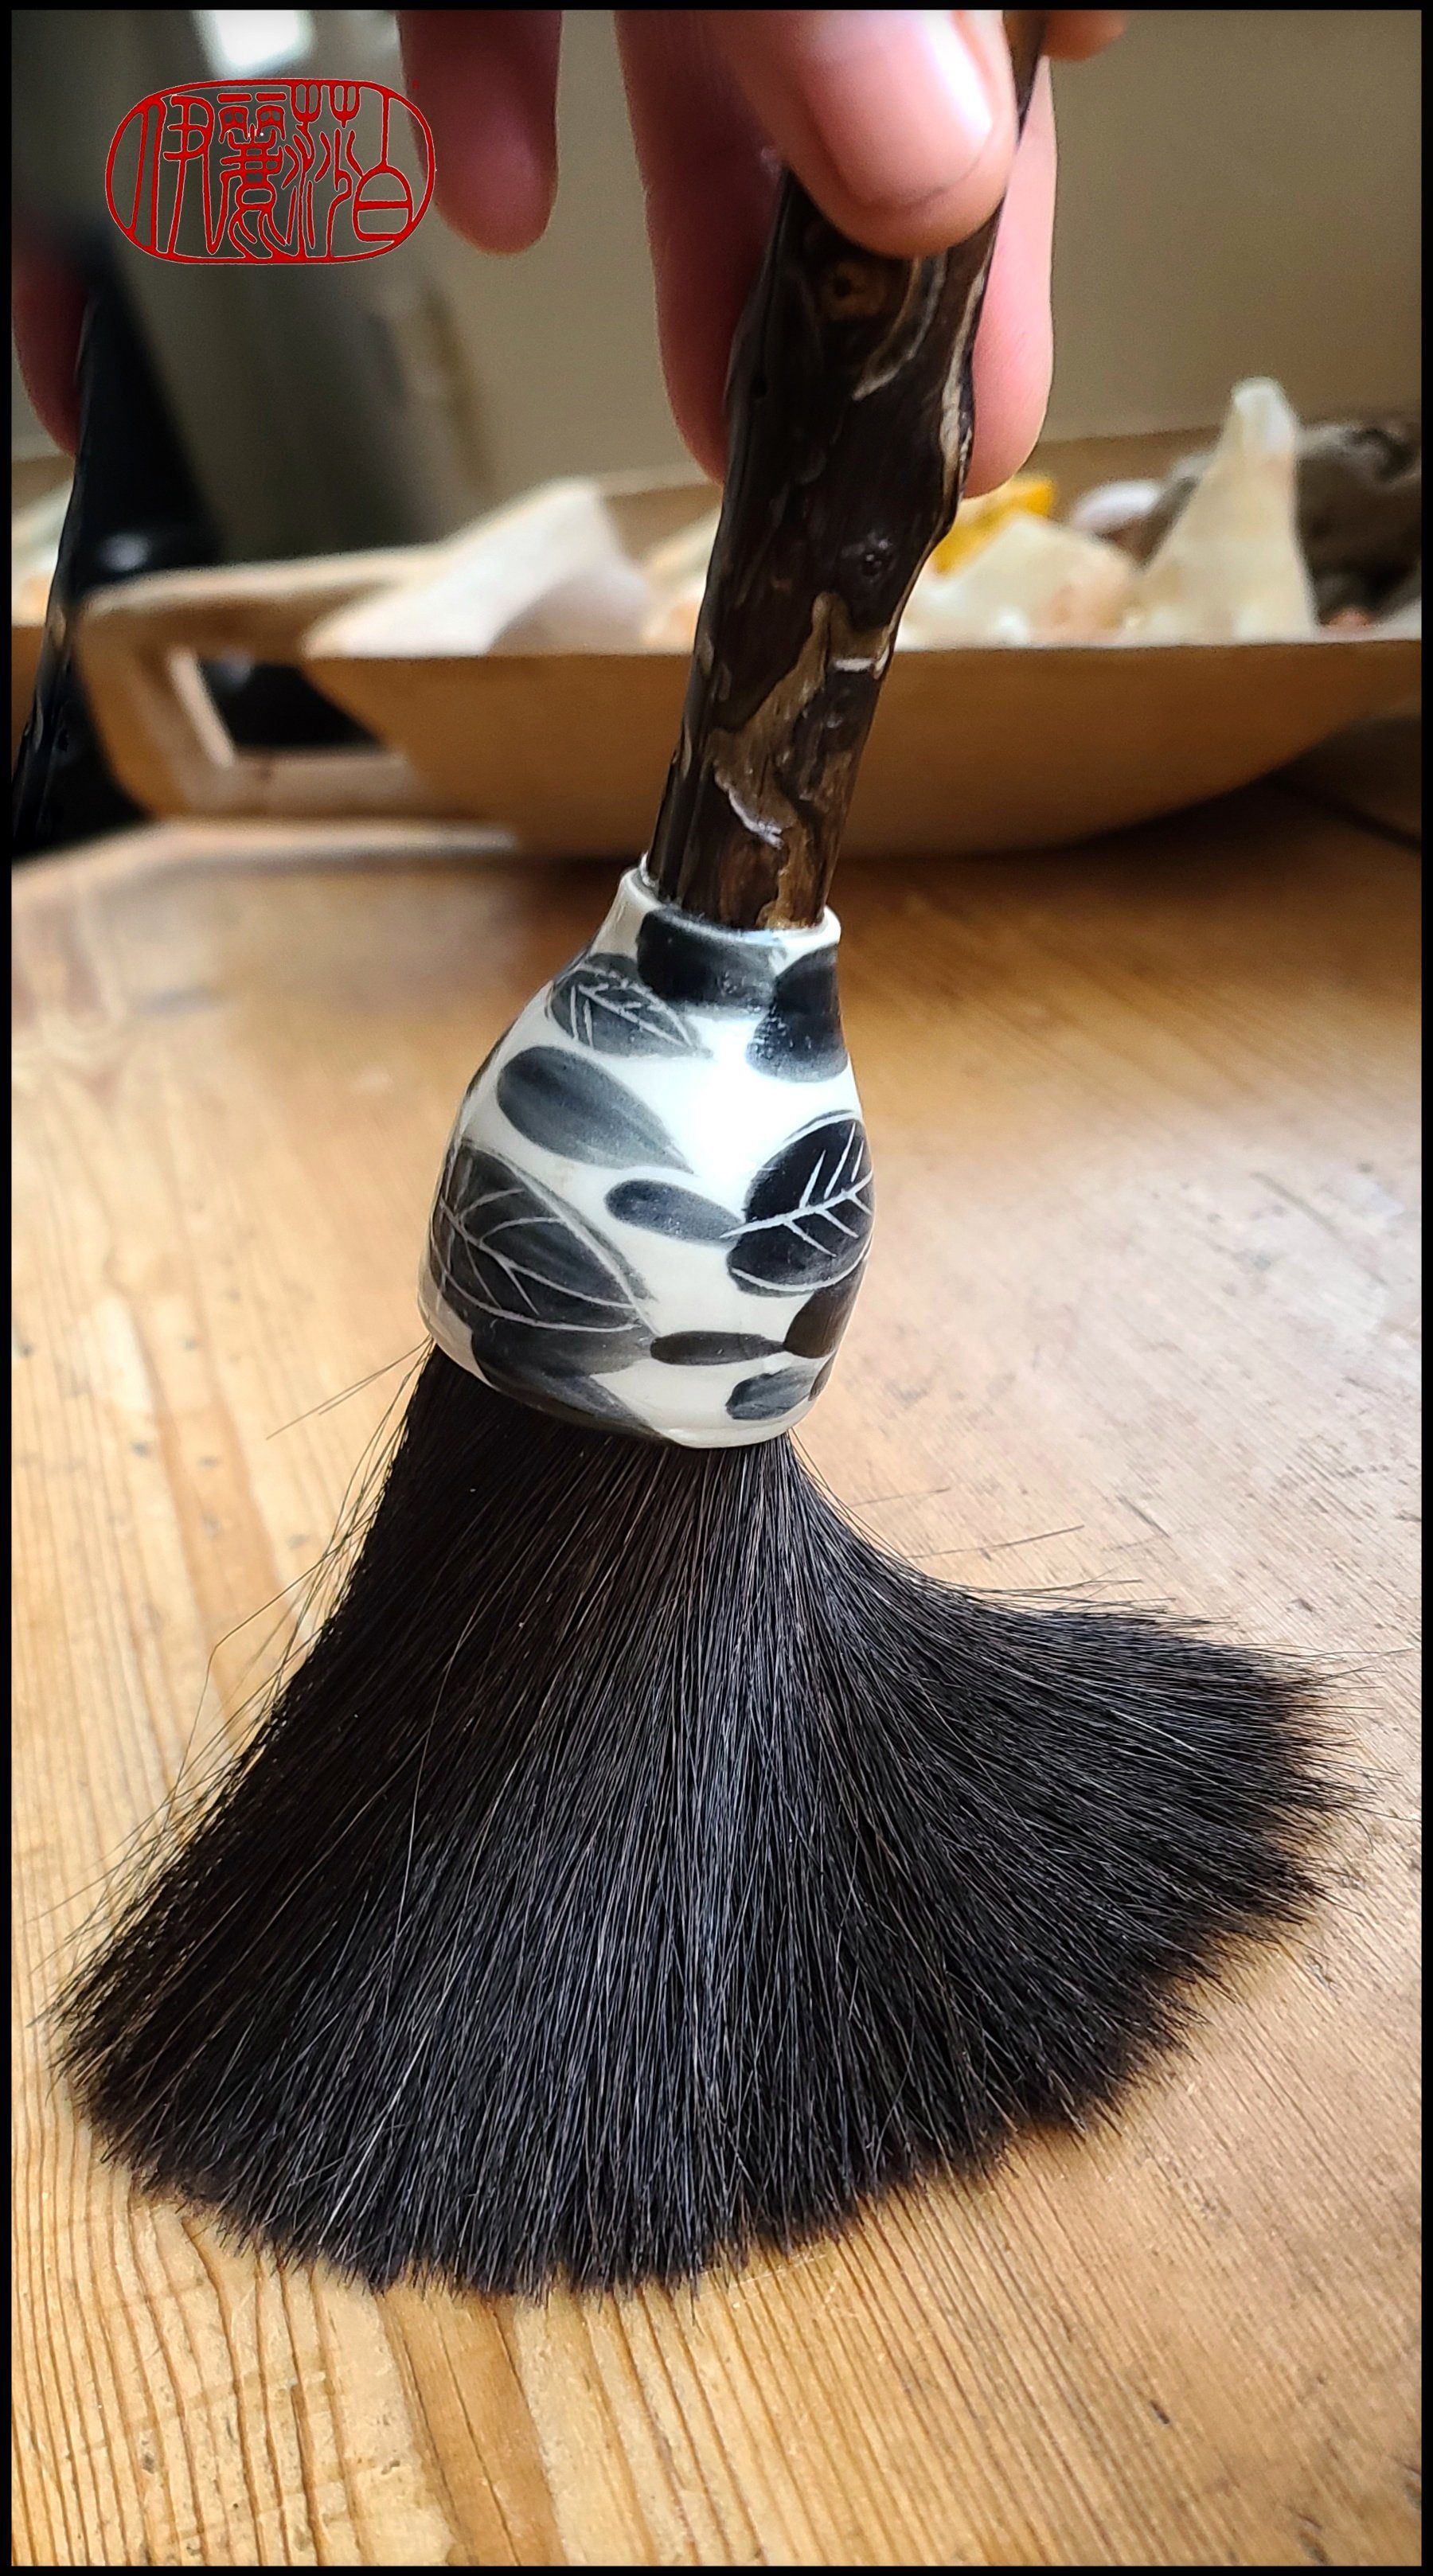 Large & Medium Sumi-e Paint Horsehair Paintbrushes With Wormwood Handles Art Supplies Elizabeth Schowachert Art